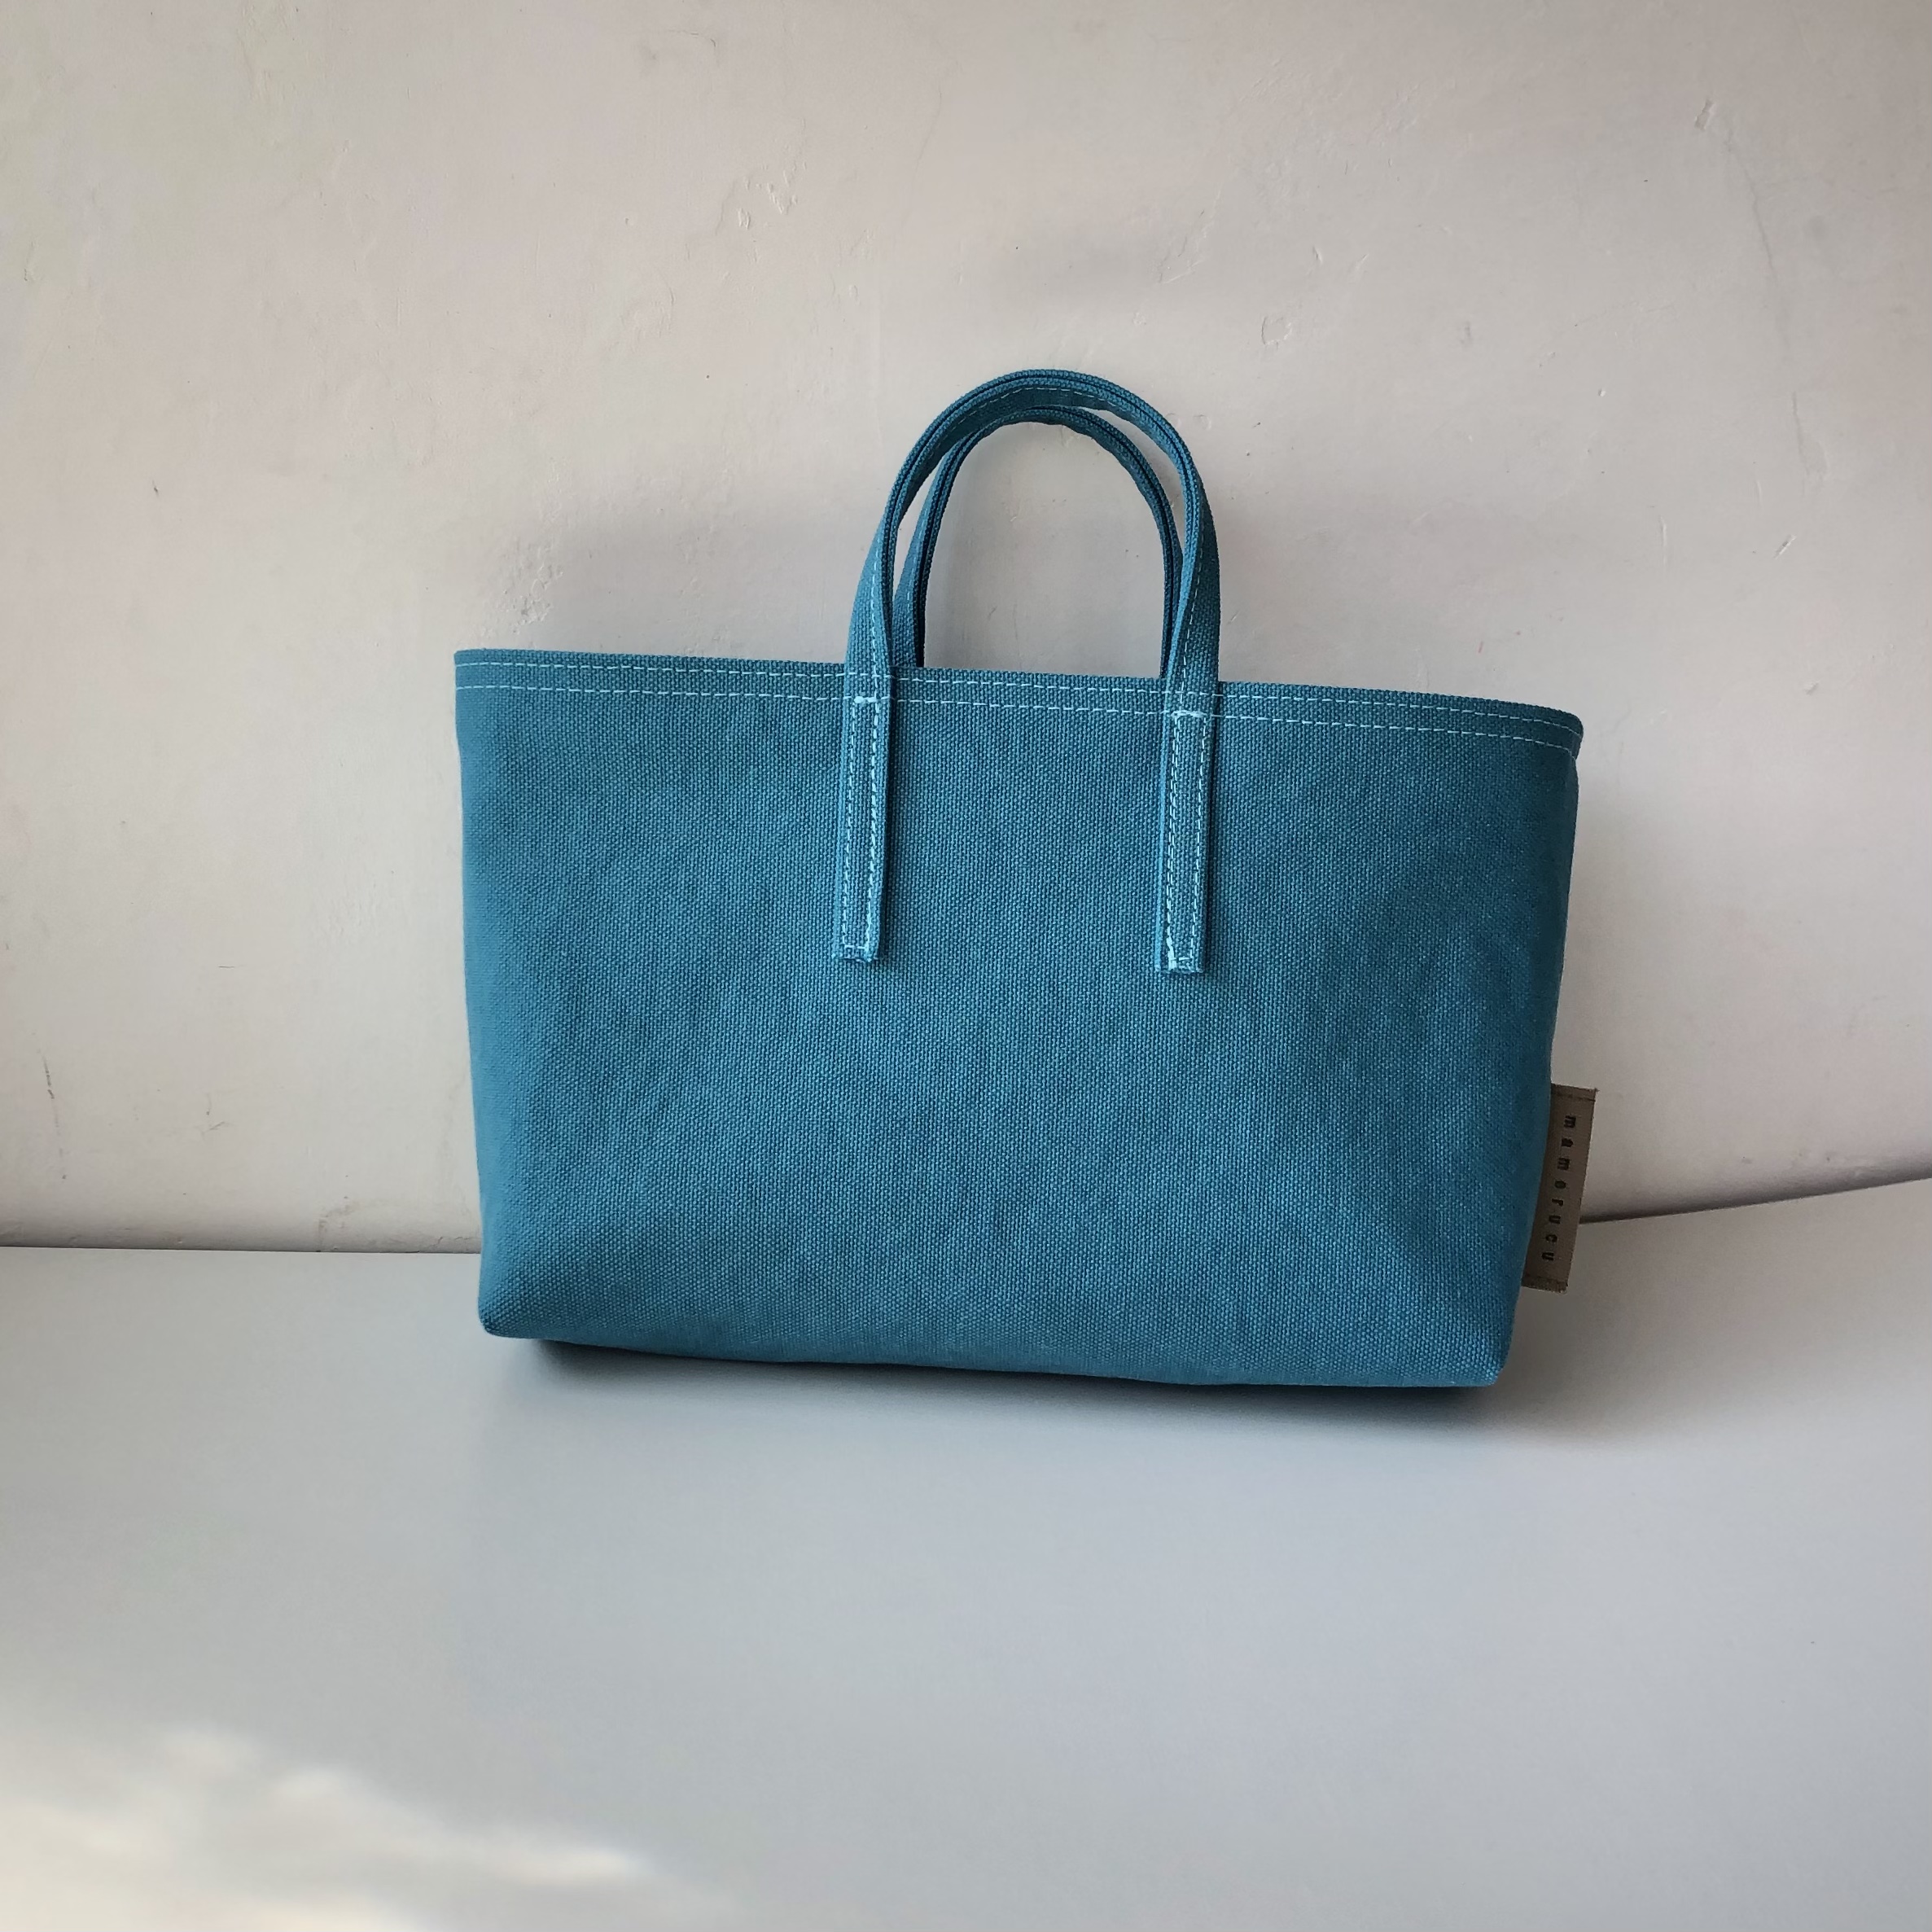 Miniバッグ 横タイプ ターコイズブルー ベージュ Iichi ハンドメイド クラフト作品 手仕事品の通販